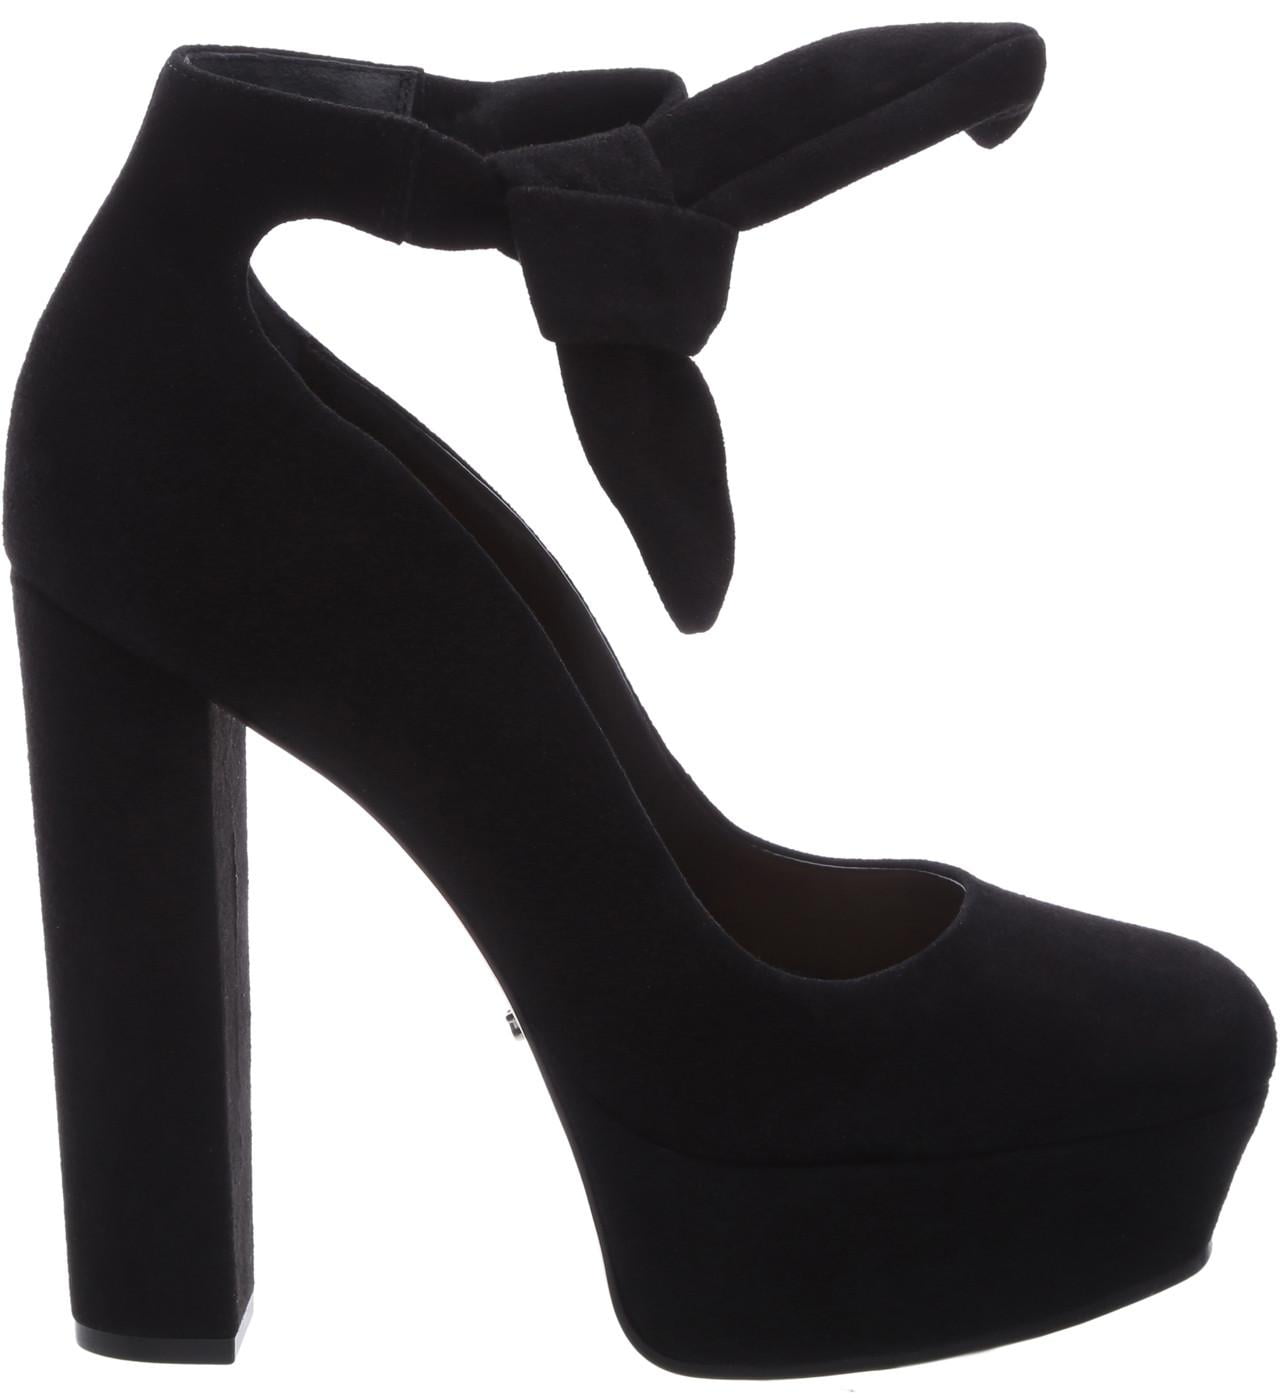 black high heels with thick heel